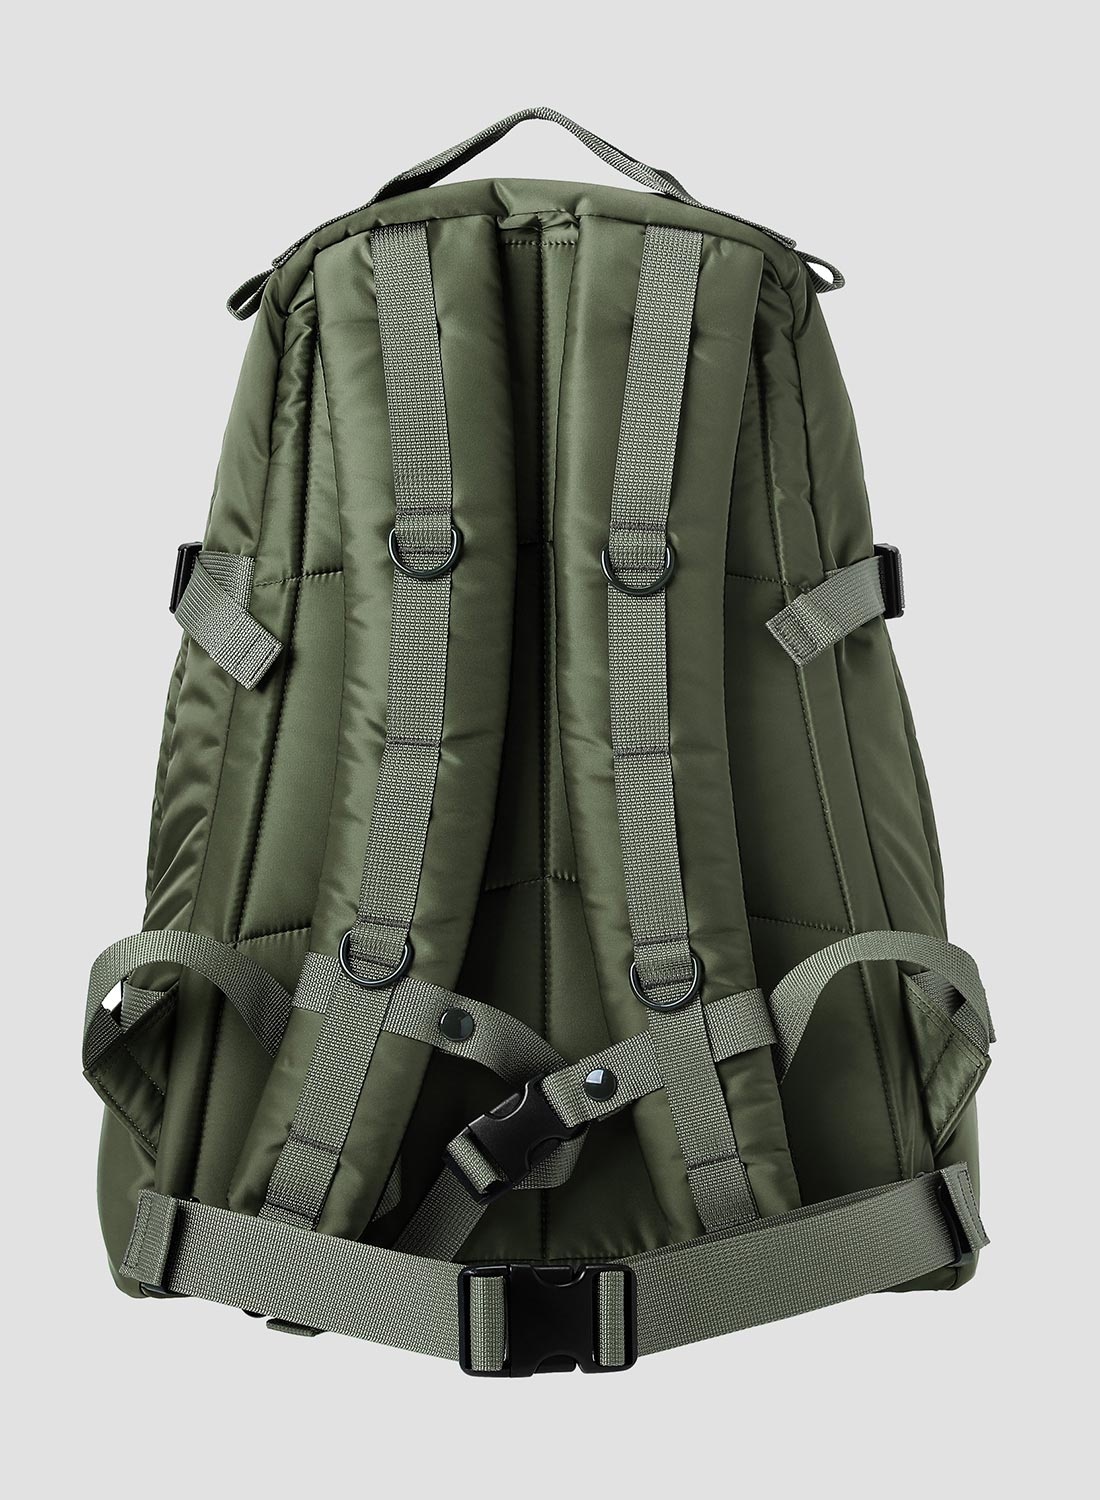 Porter-Yoshida & Co Tanker Day Backpack in Sage Green - 5